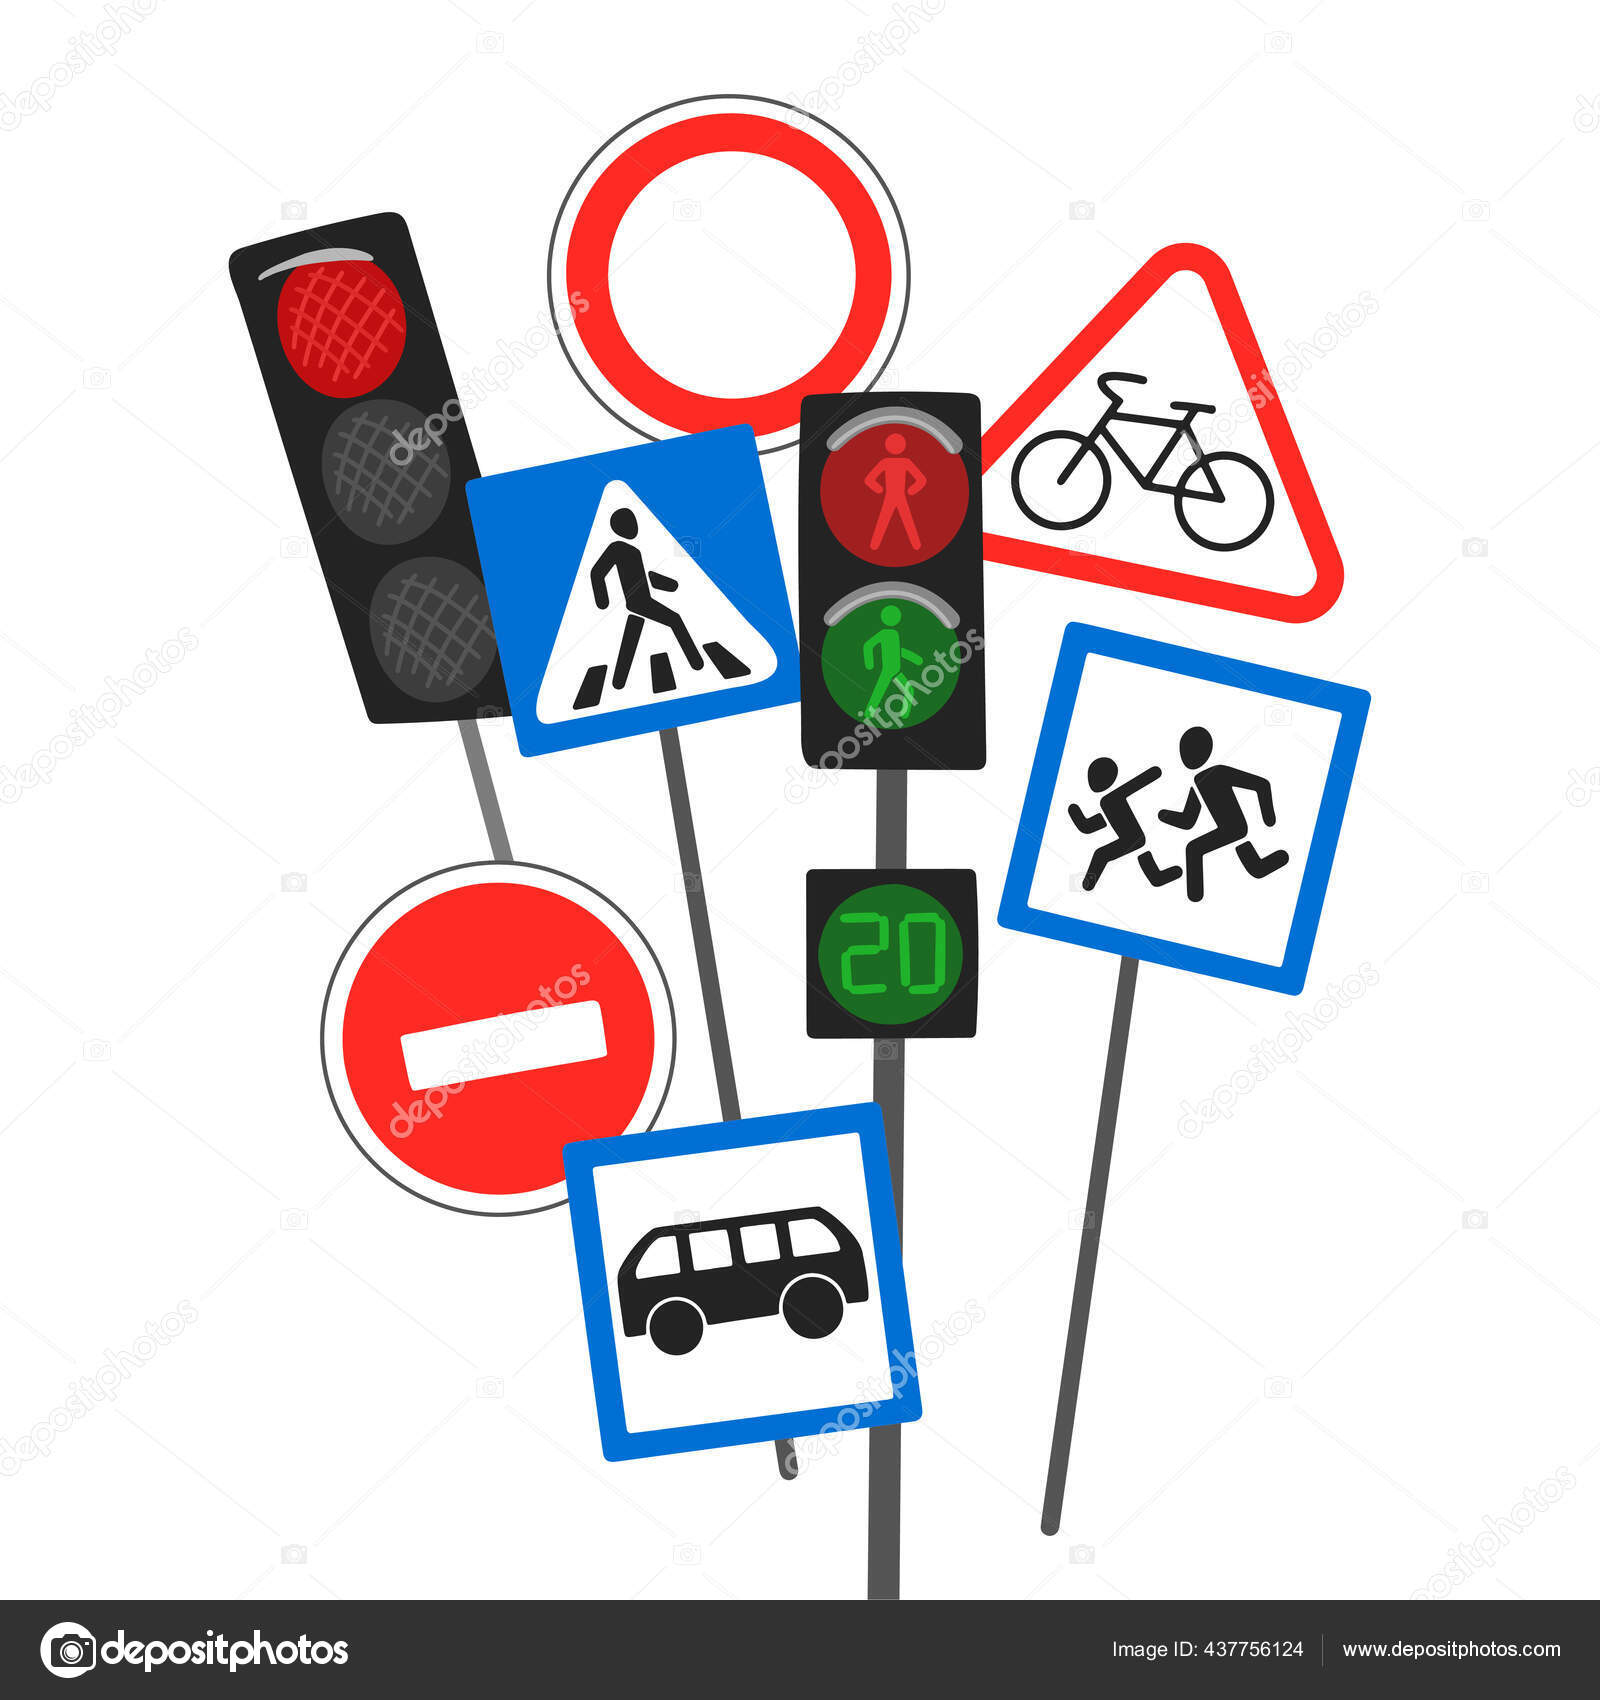 depositphotos 437756124 stock illustration traffic lights and traffic signs